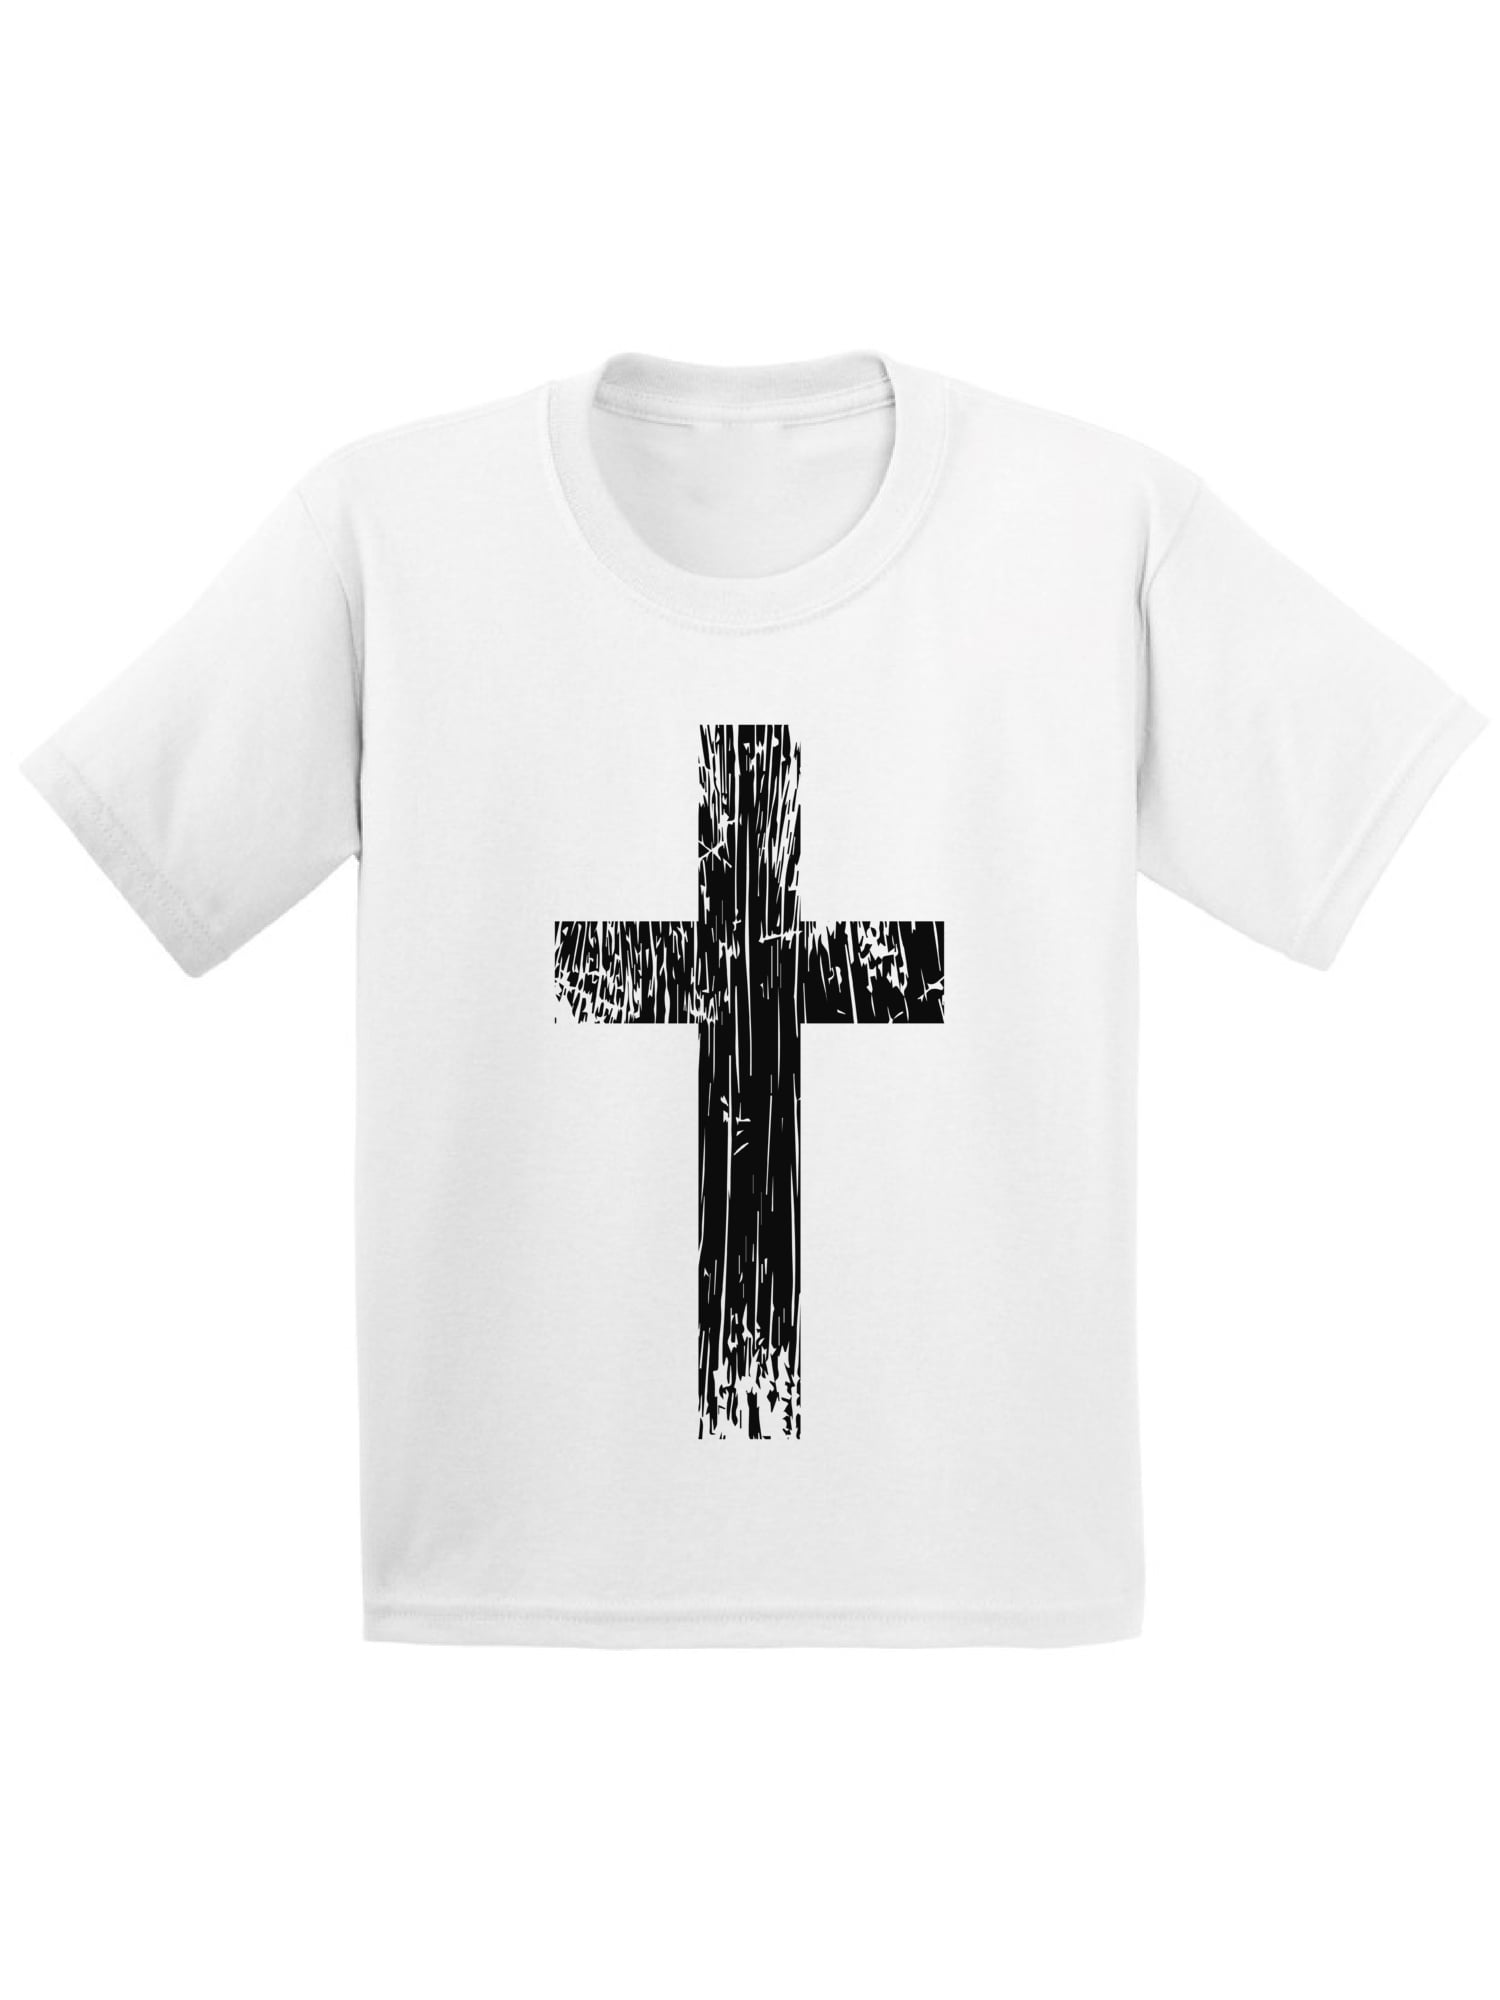 Awkward Styles Black Cross Toddler T Shirt Jesus Shirts for Kids Shirt ...